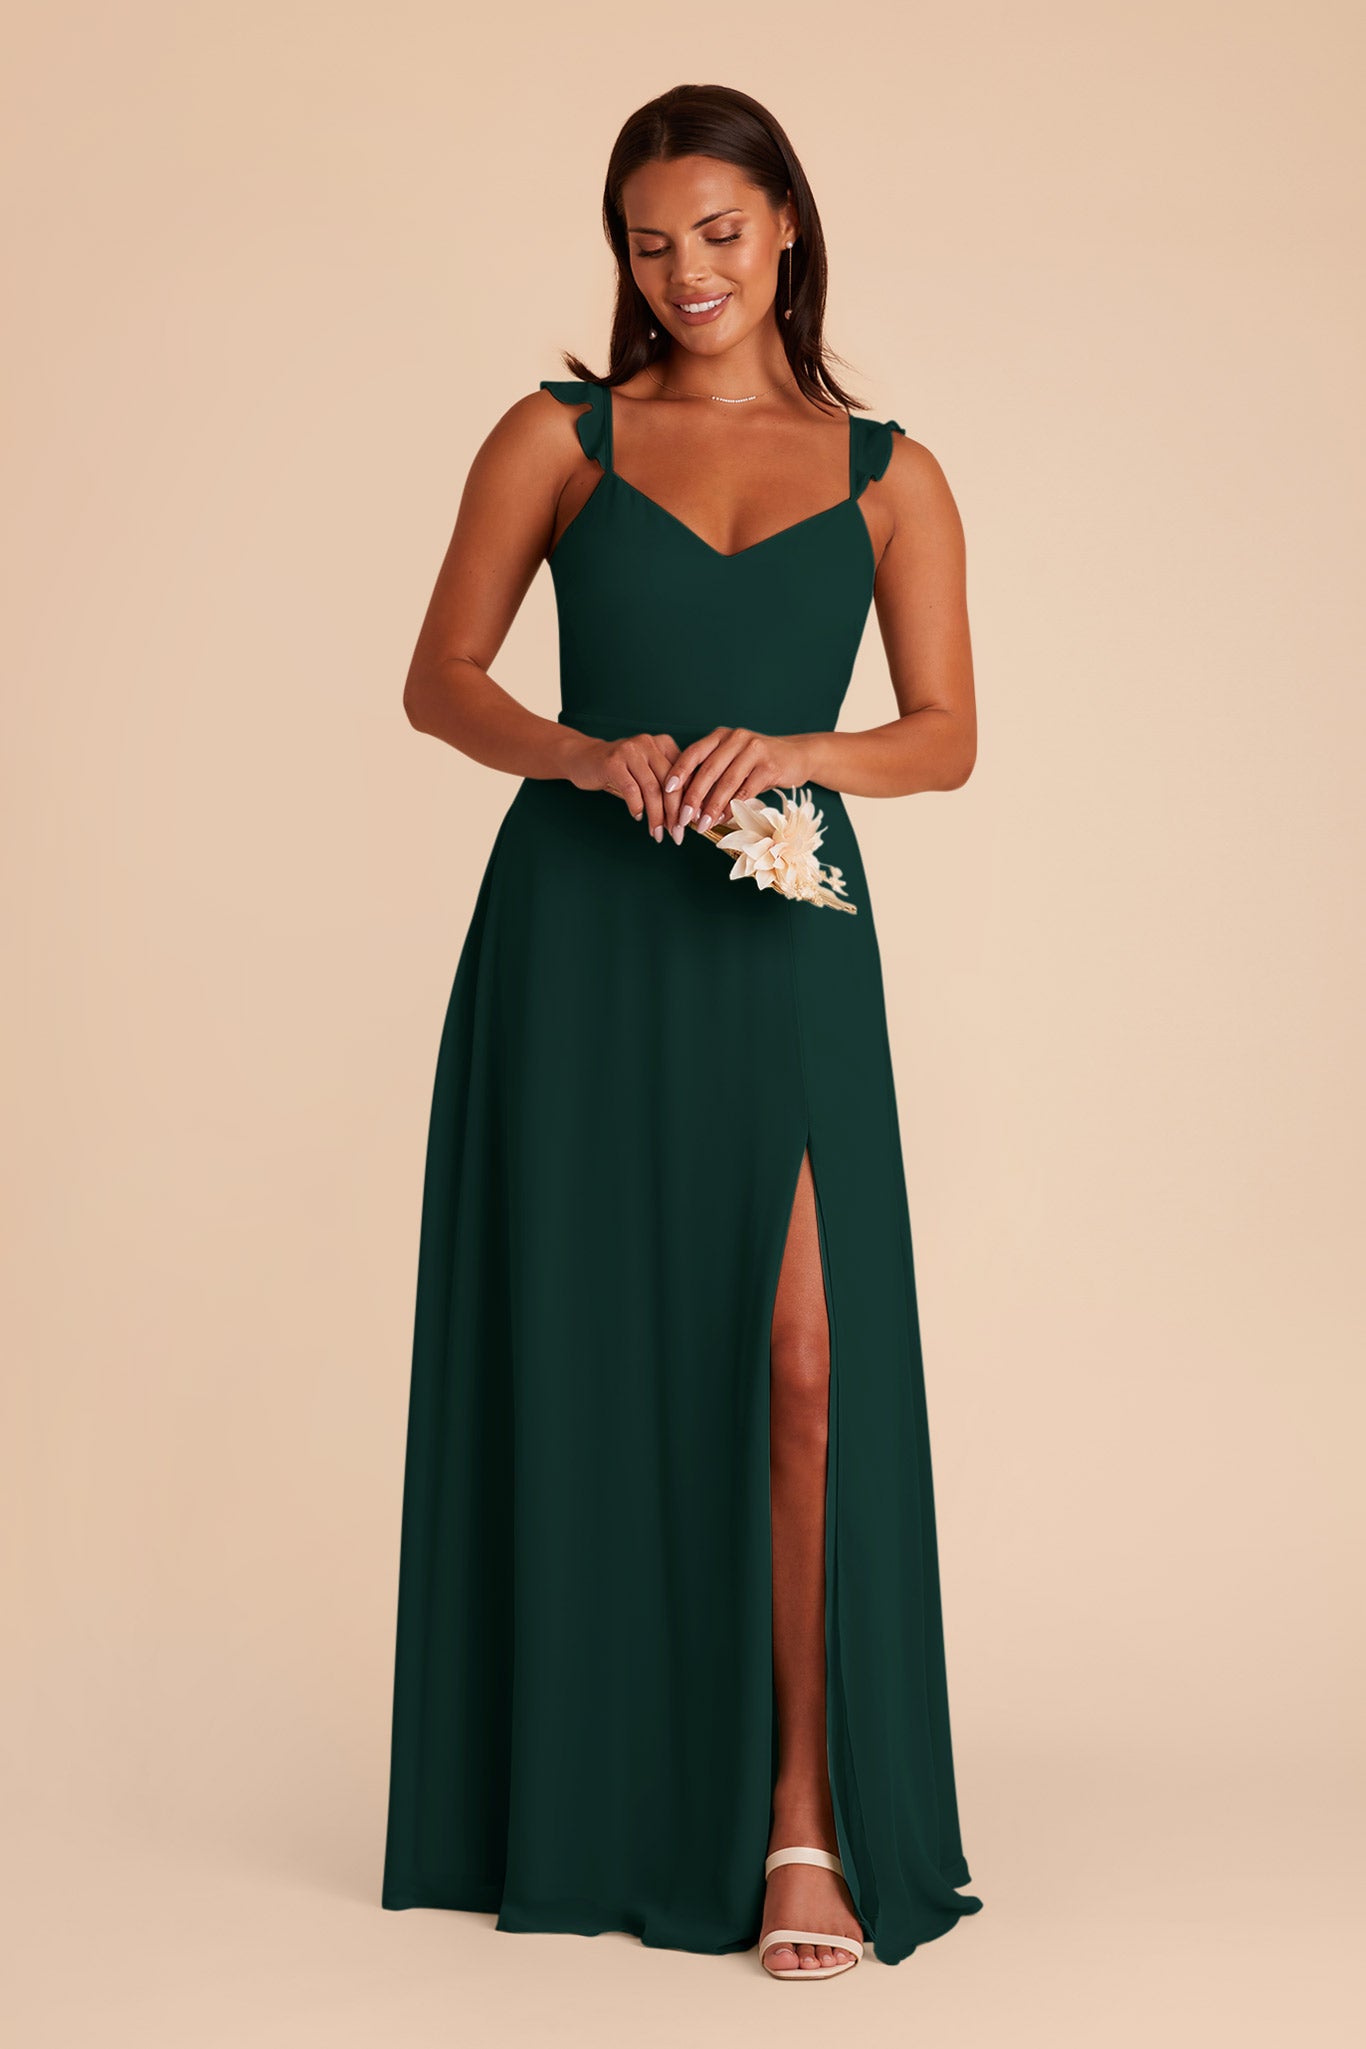 Emerald Doris Chiffon Dress by Birdy Grey